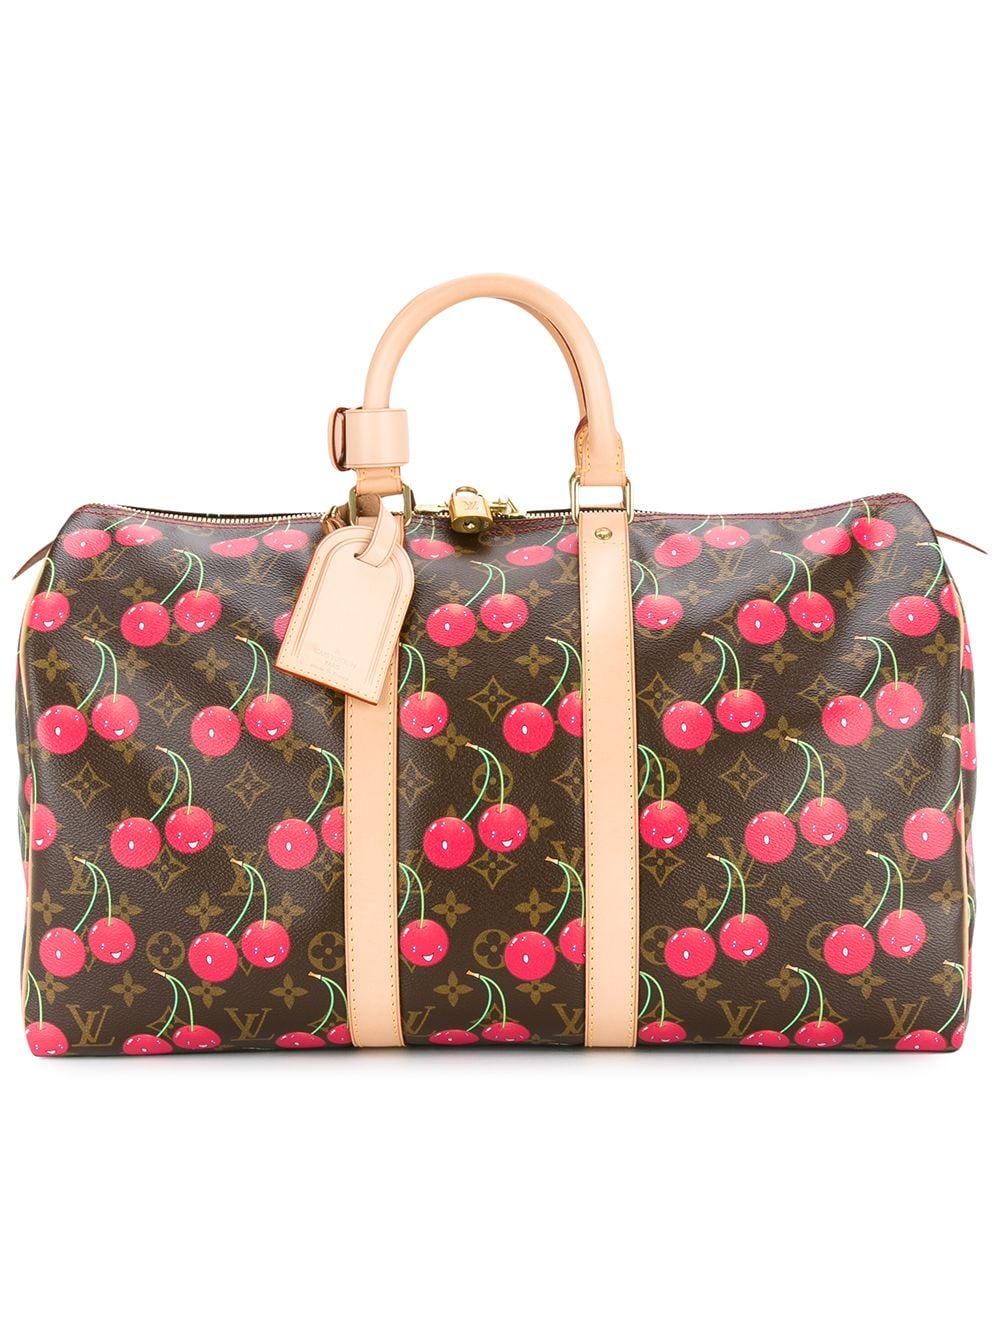 LOUIS VUITTON Monogram Cherry Keepall 45 Duffle Travel Bag For